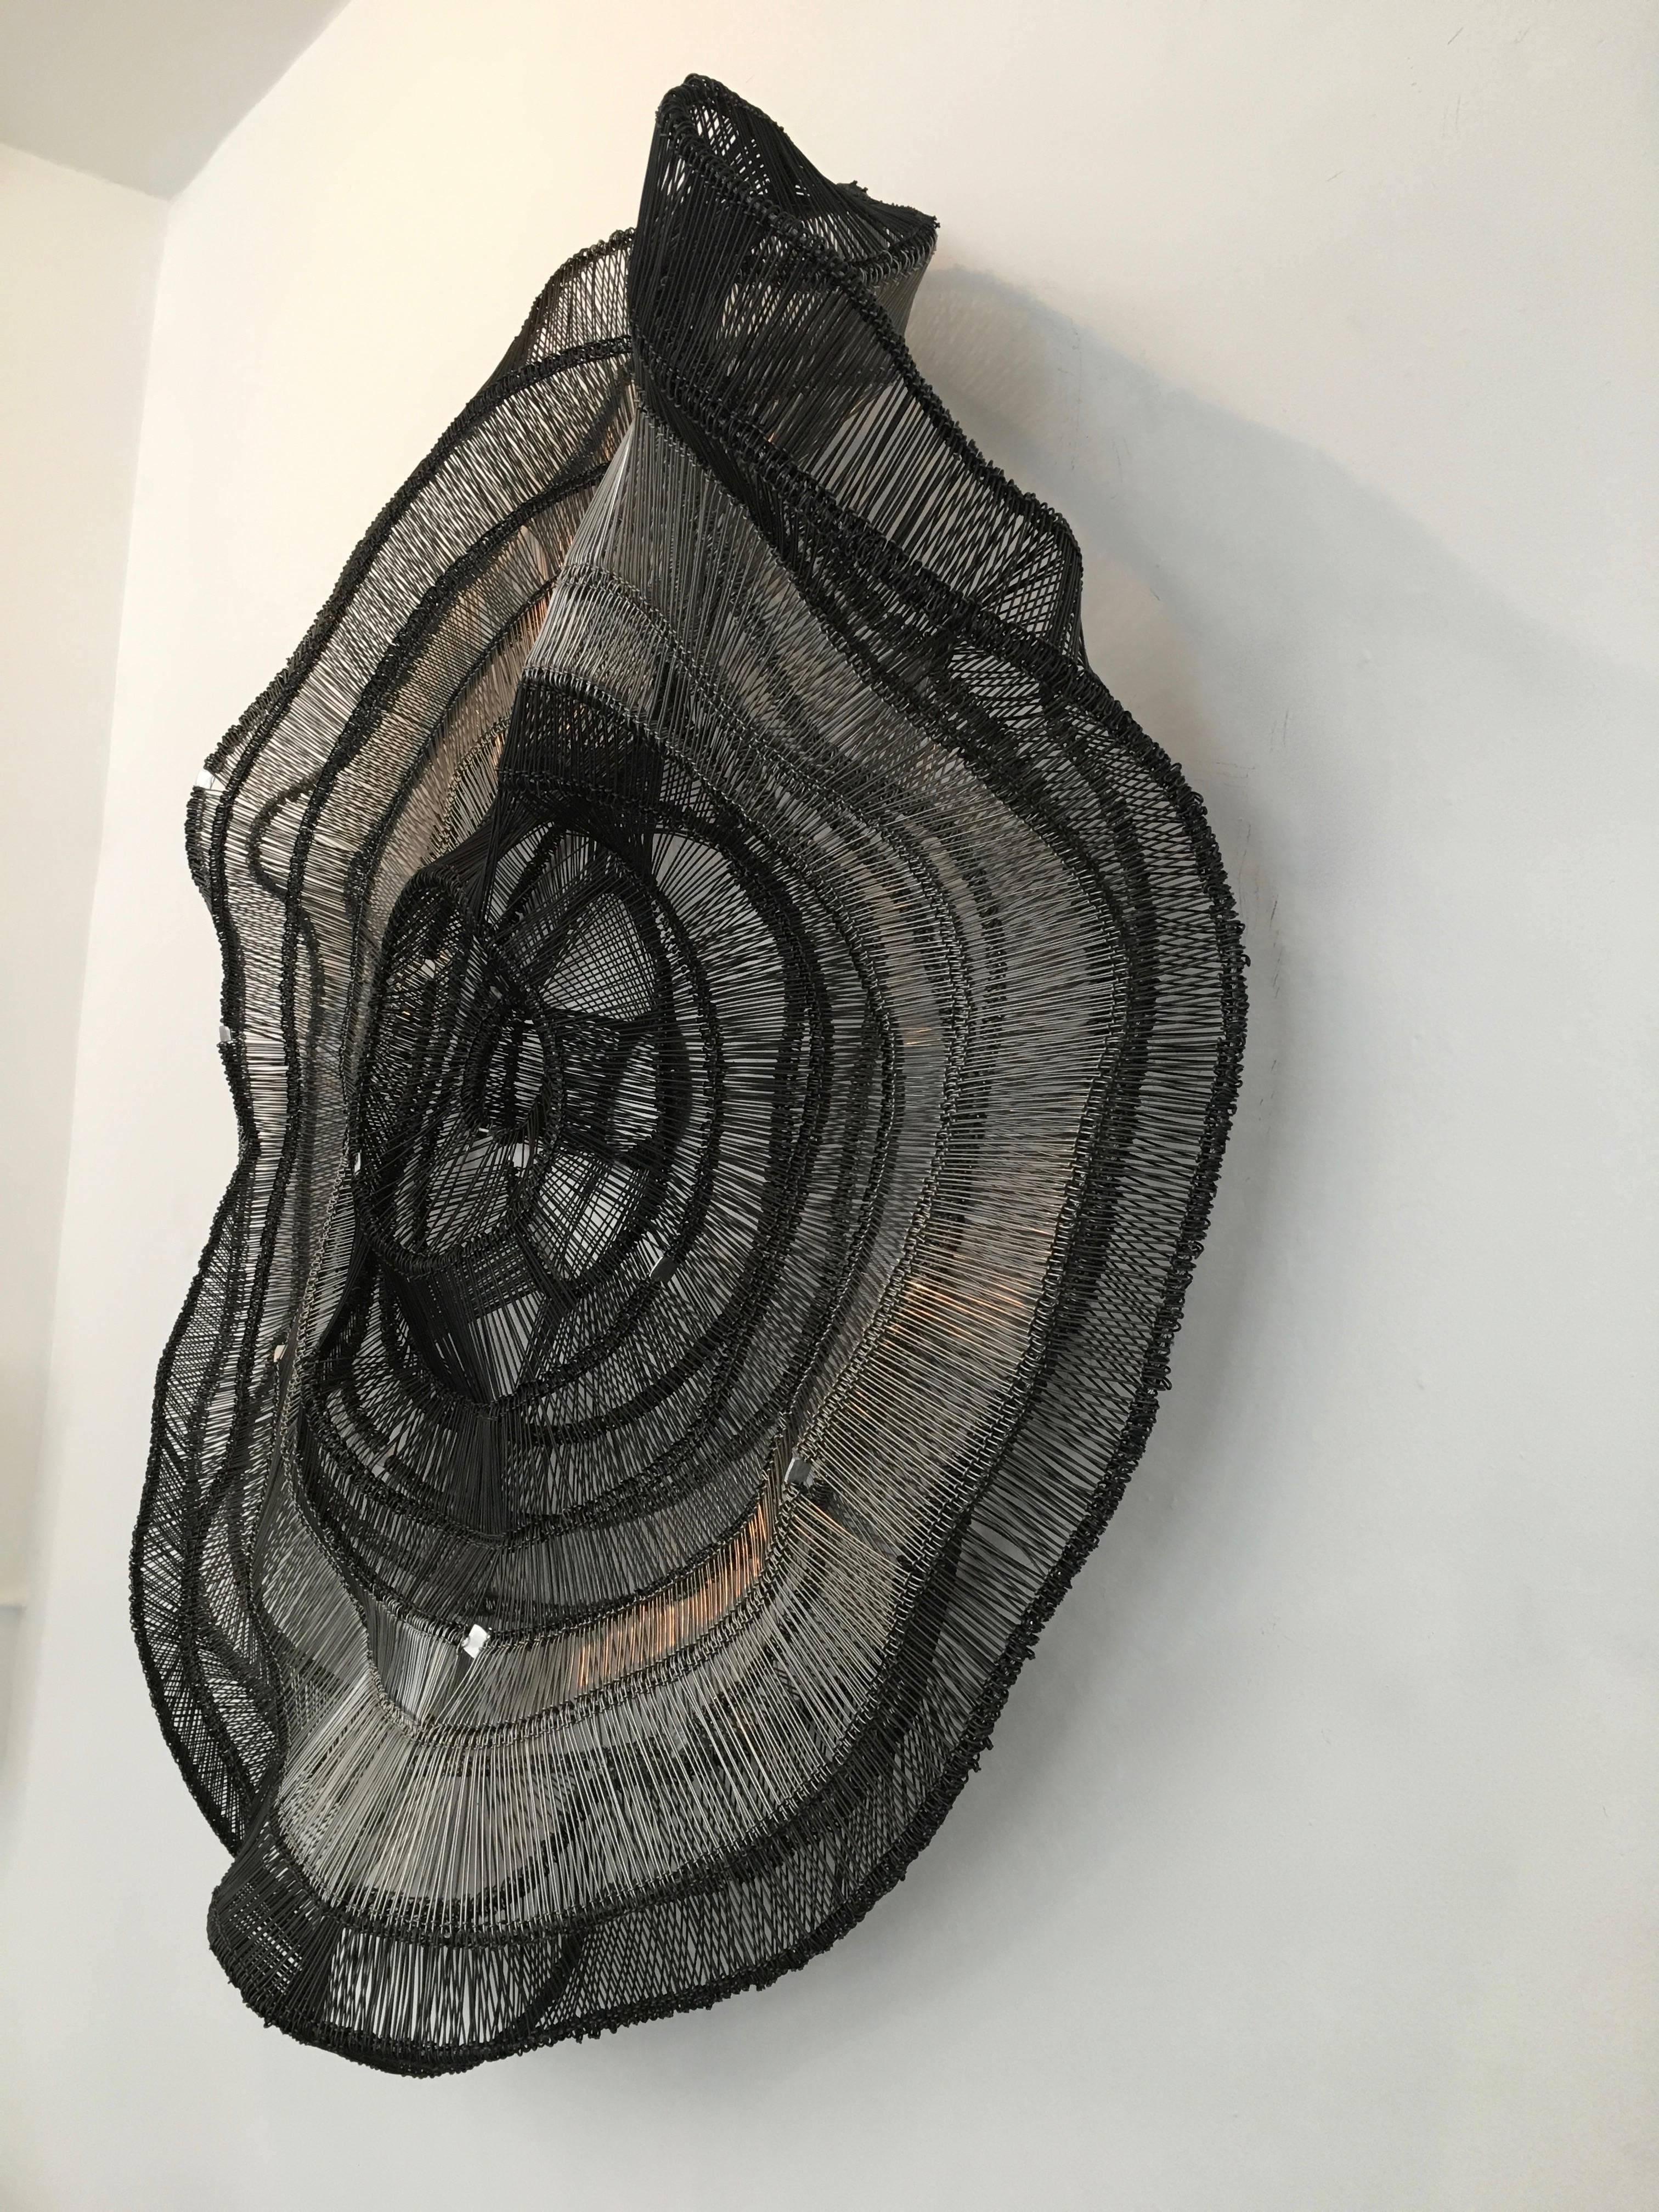 Artist Eric Gushee Emergence Series Woven Wire Wall Sculpture 1